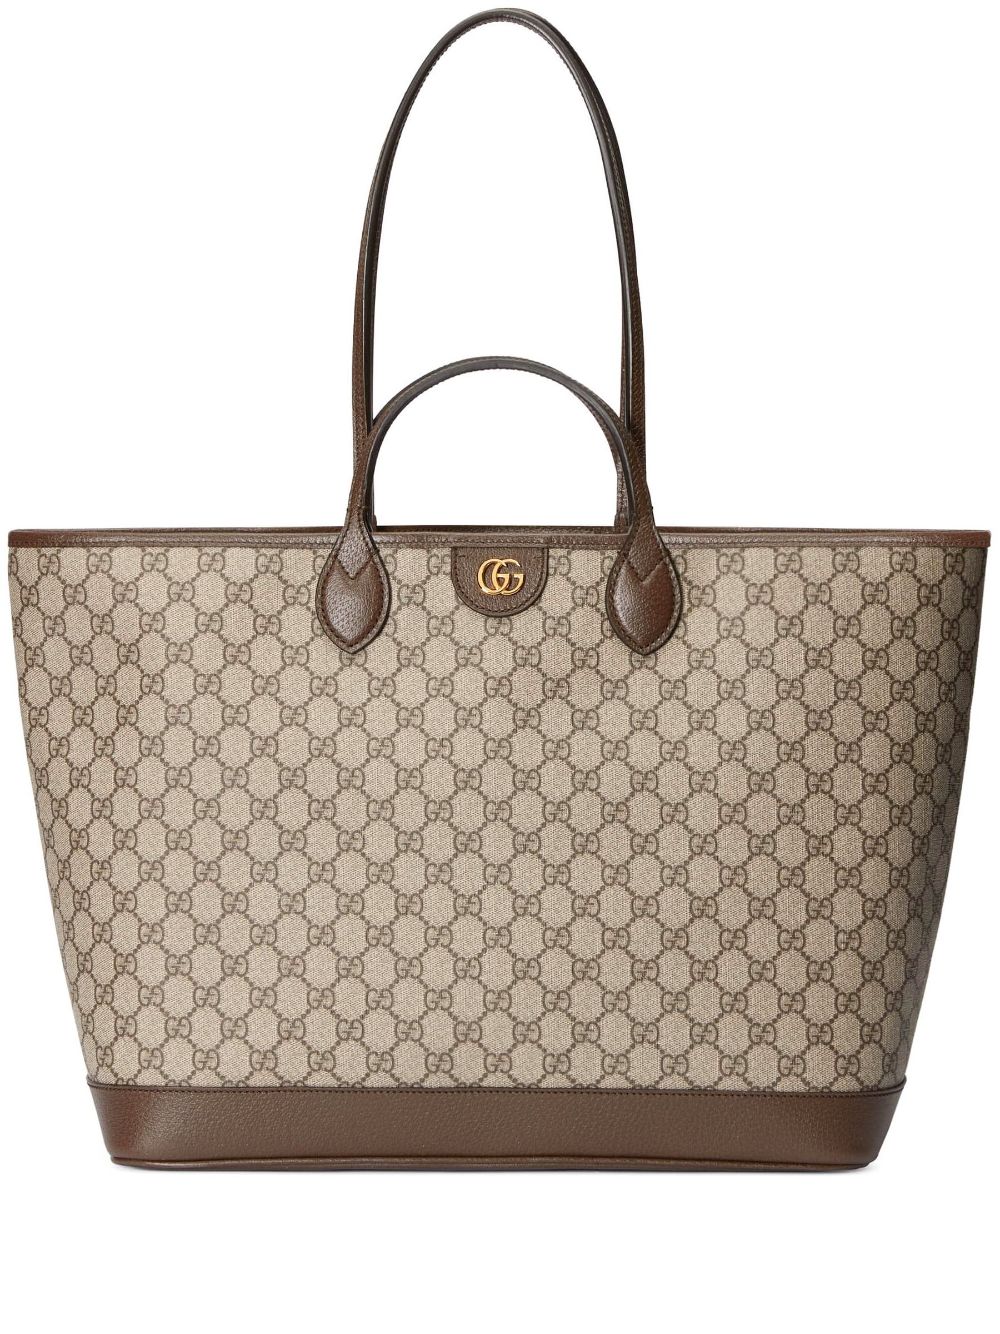 Gucci Ophelia large tote bag - 8358 Beige